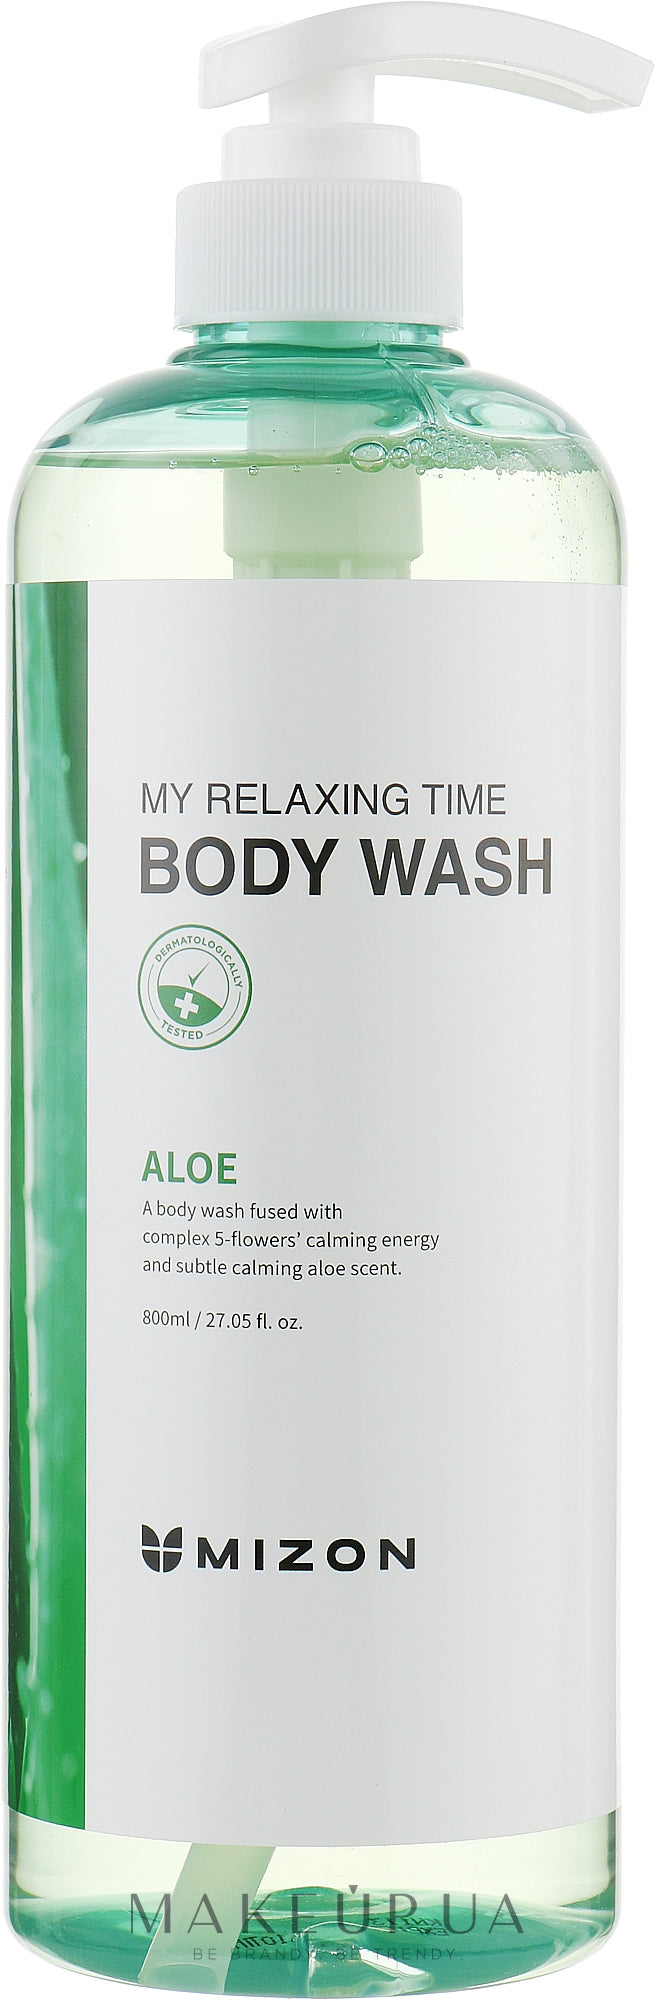 Mizon My Relaxing Time Body Wash Aloe shower gel with aloe 800 ml